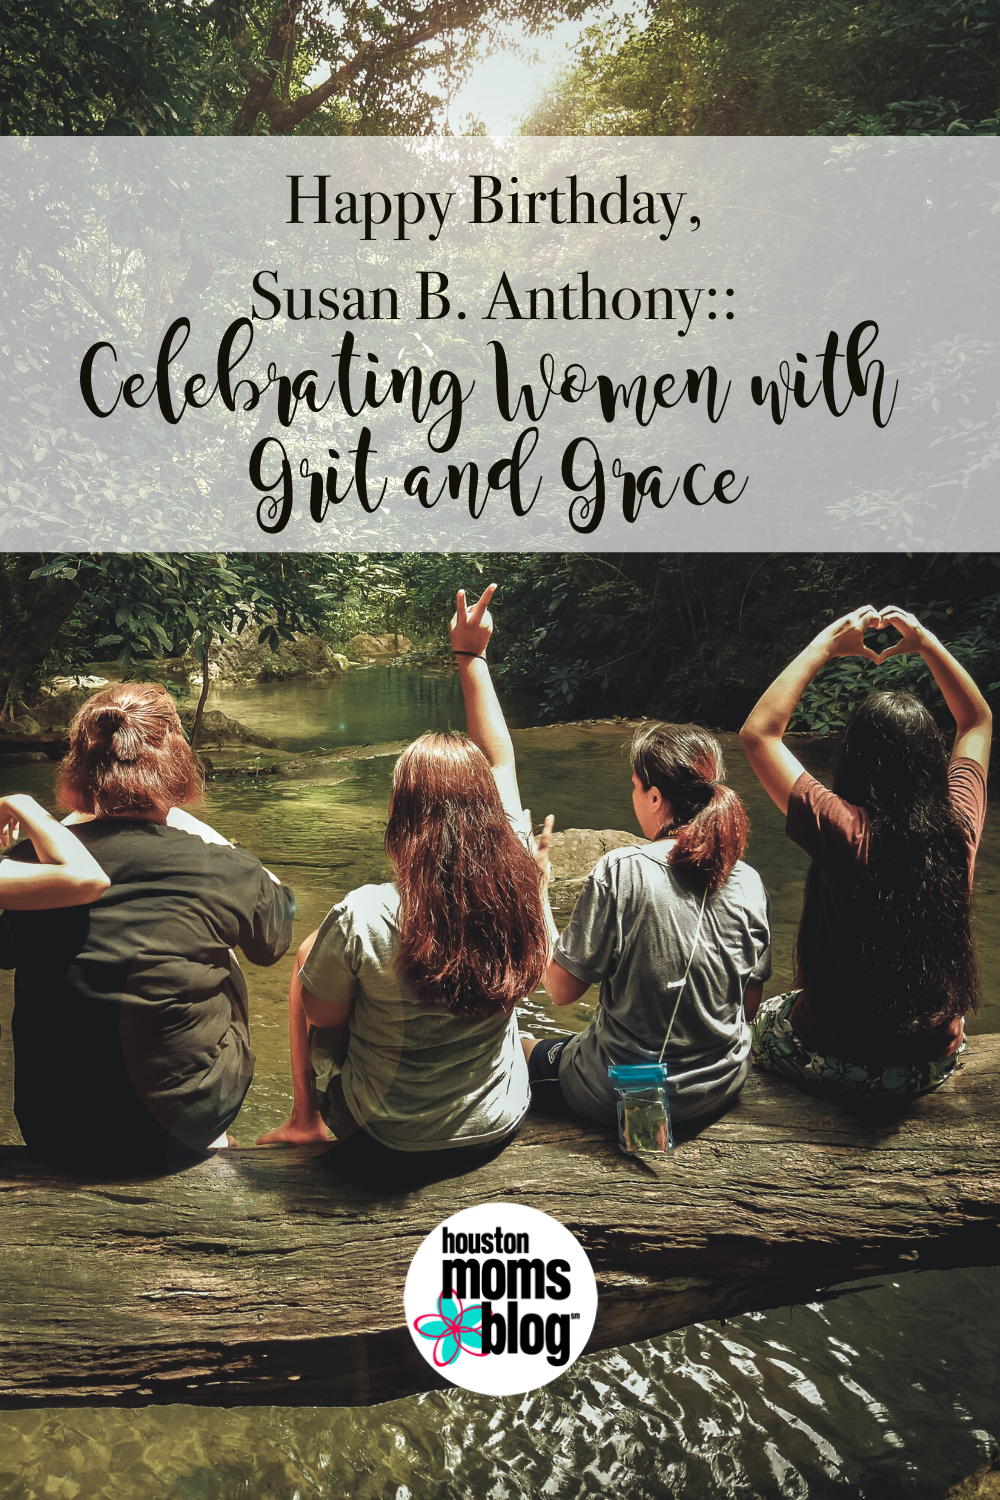 Houston Moms Blog "Happy Birthday, Susan B Anthony:: Celebrating Women with Grit and Grace" #houstonmomsblog #momsaroundhouston